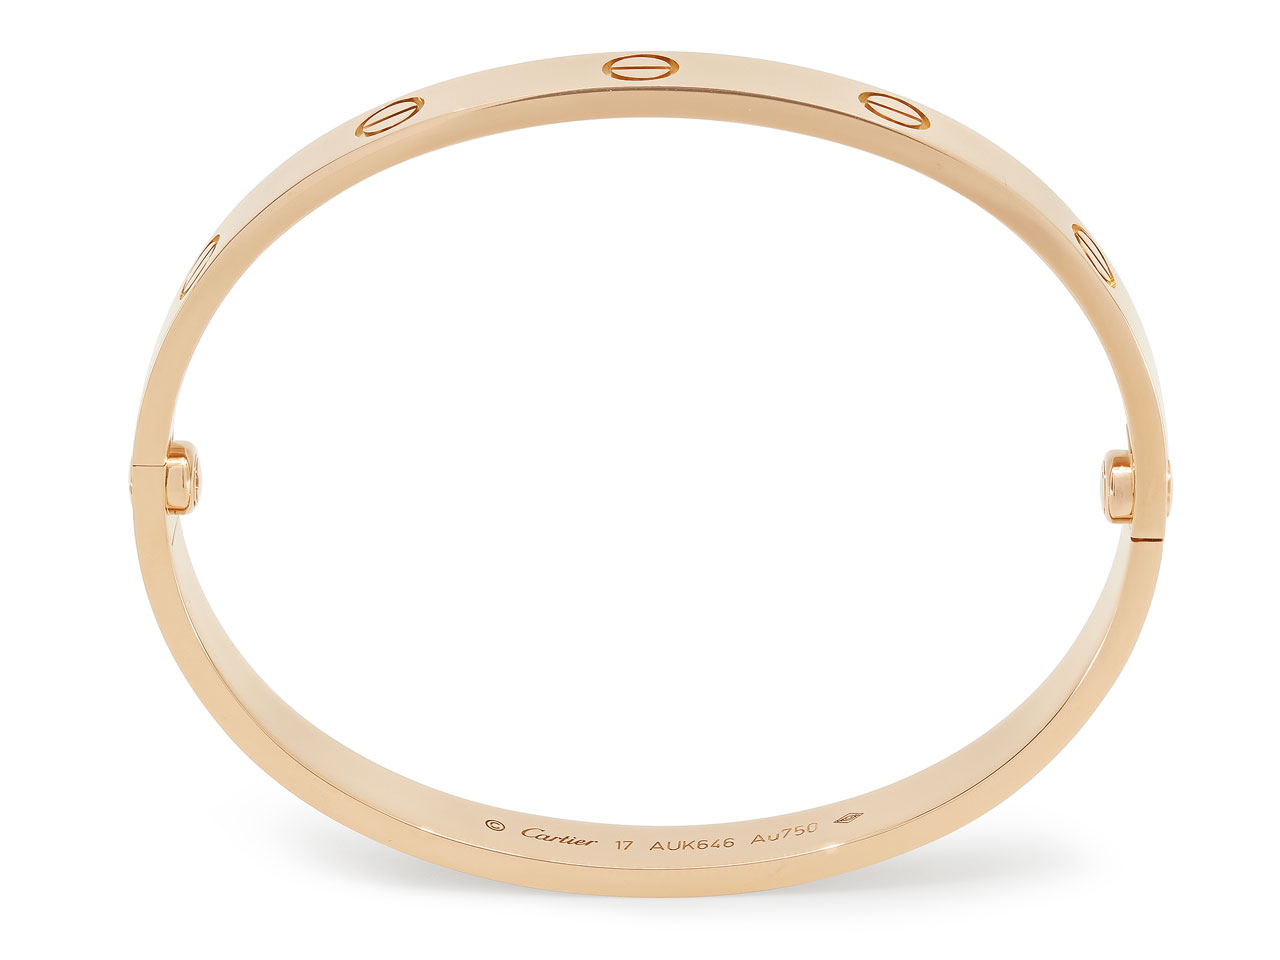 Cartier 'Love' Bracelet, 18K Rose Gold, Size 17